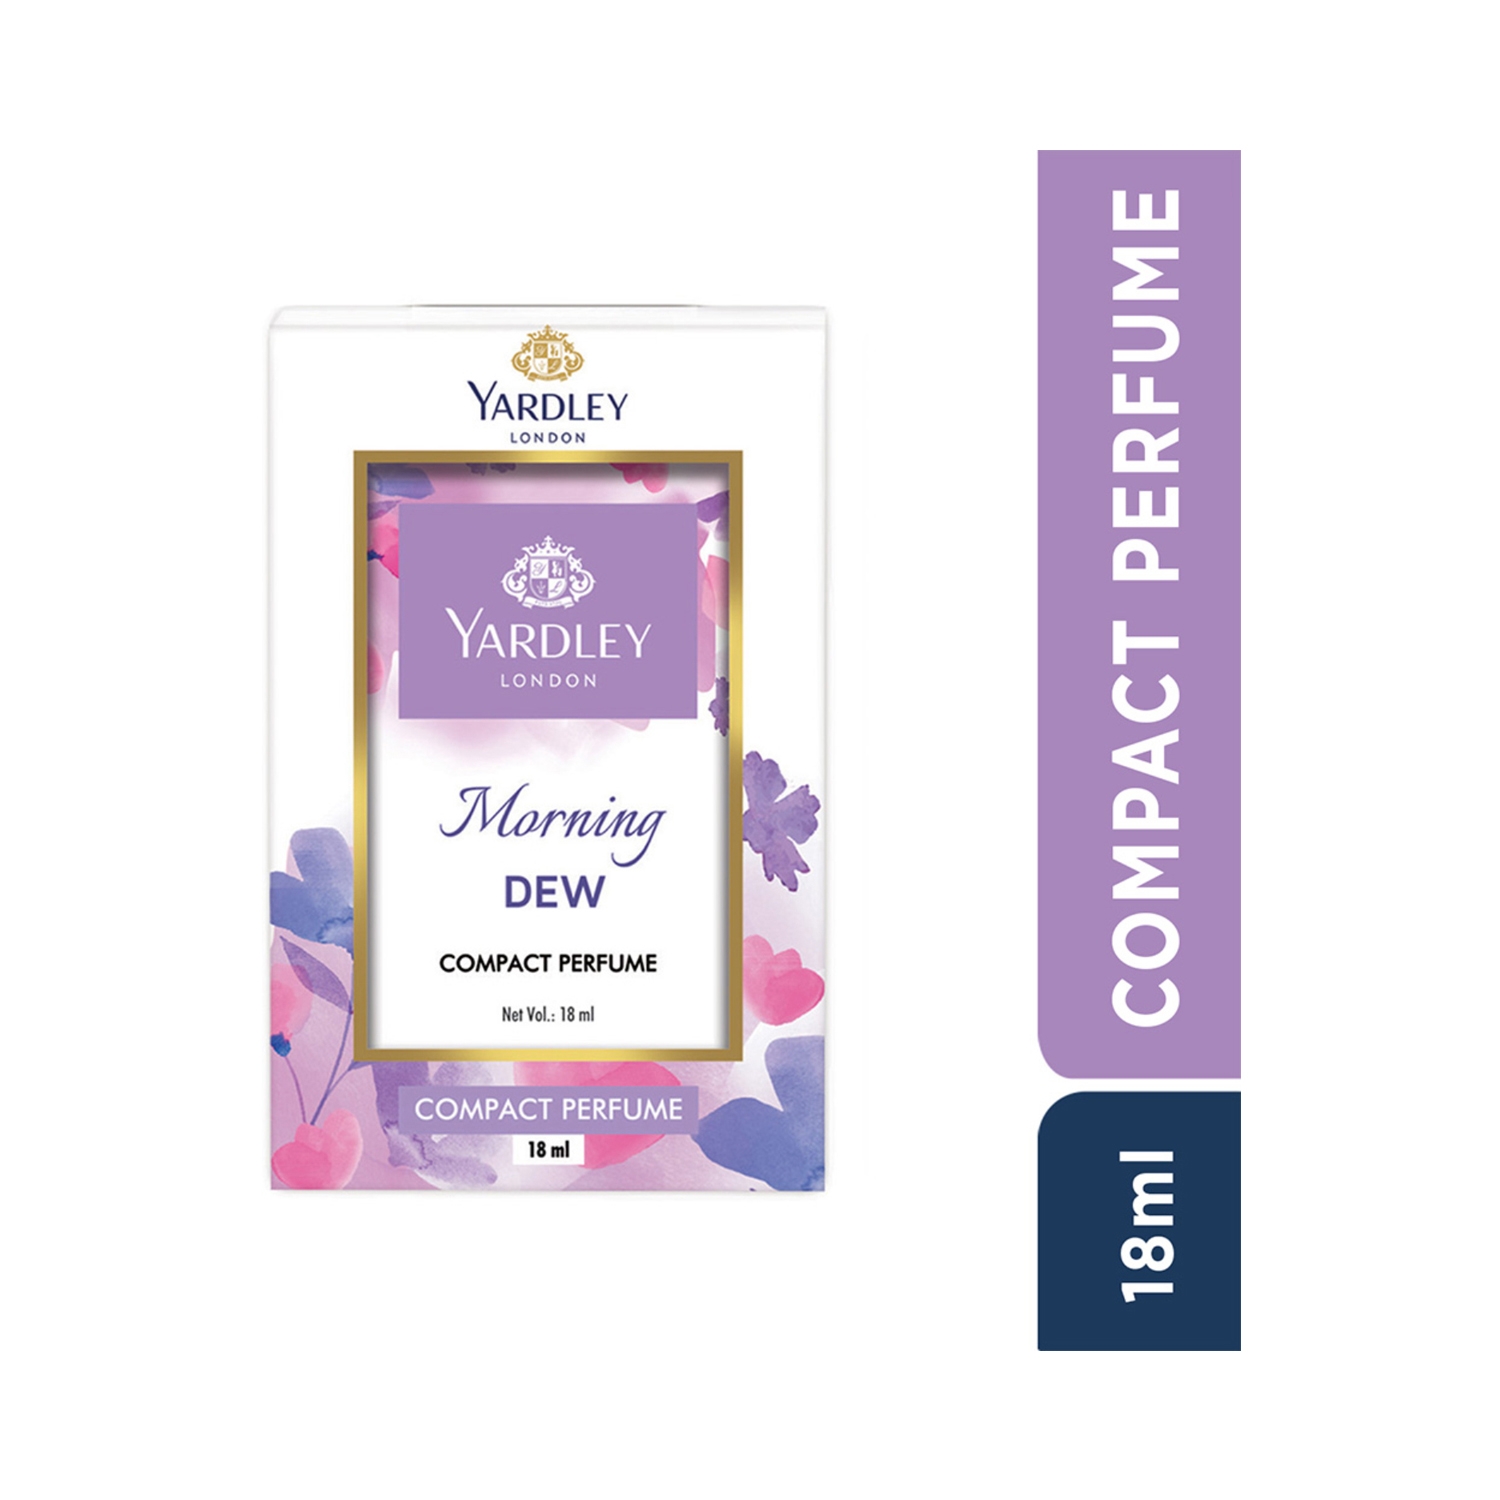 Yardley London Morning Dew Compact Perfume (18ml)